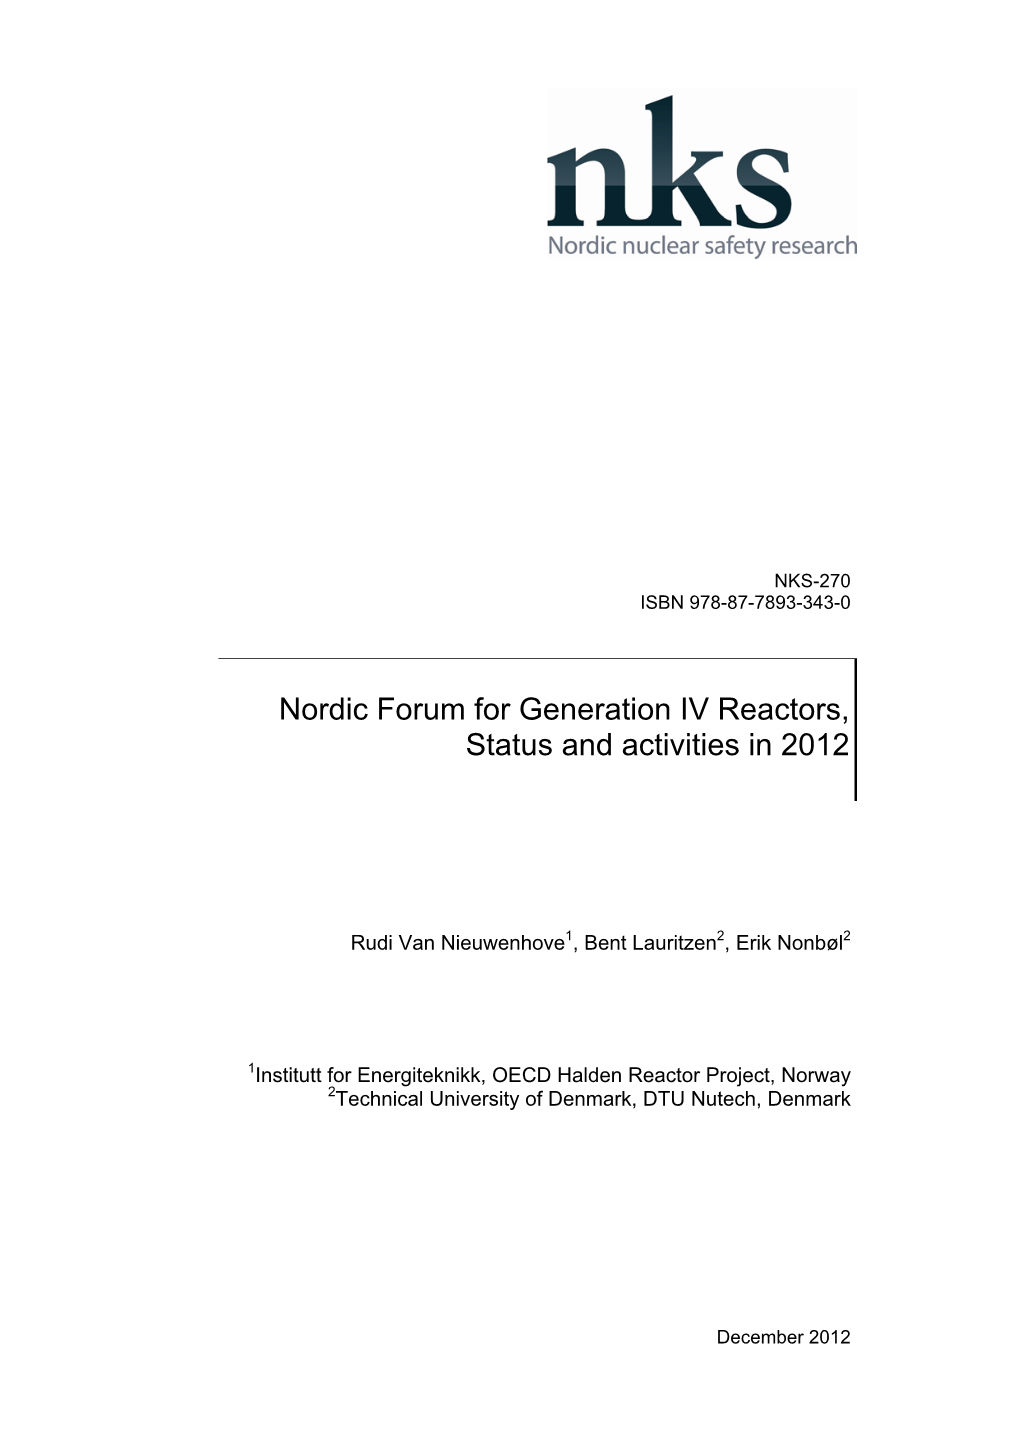 Nordic Forum for Generation IV Reactors, Status and Activities in 2012